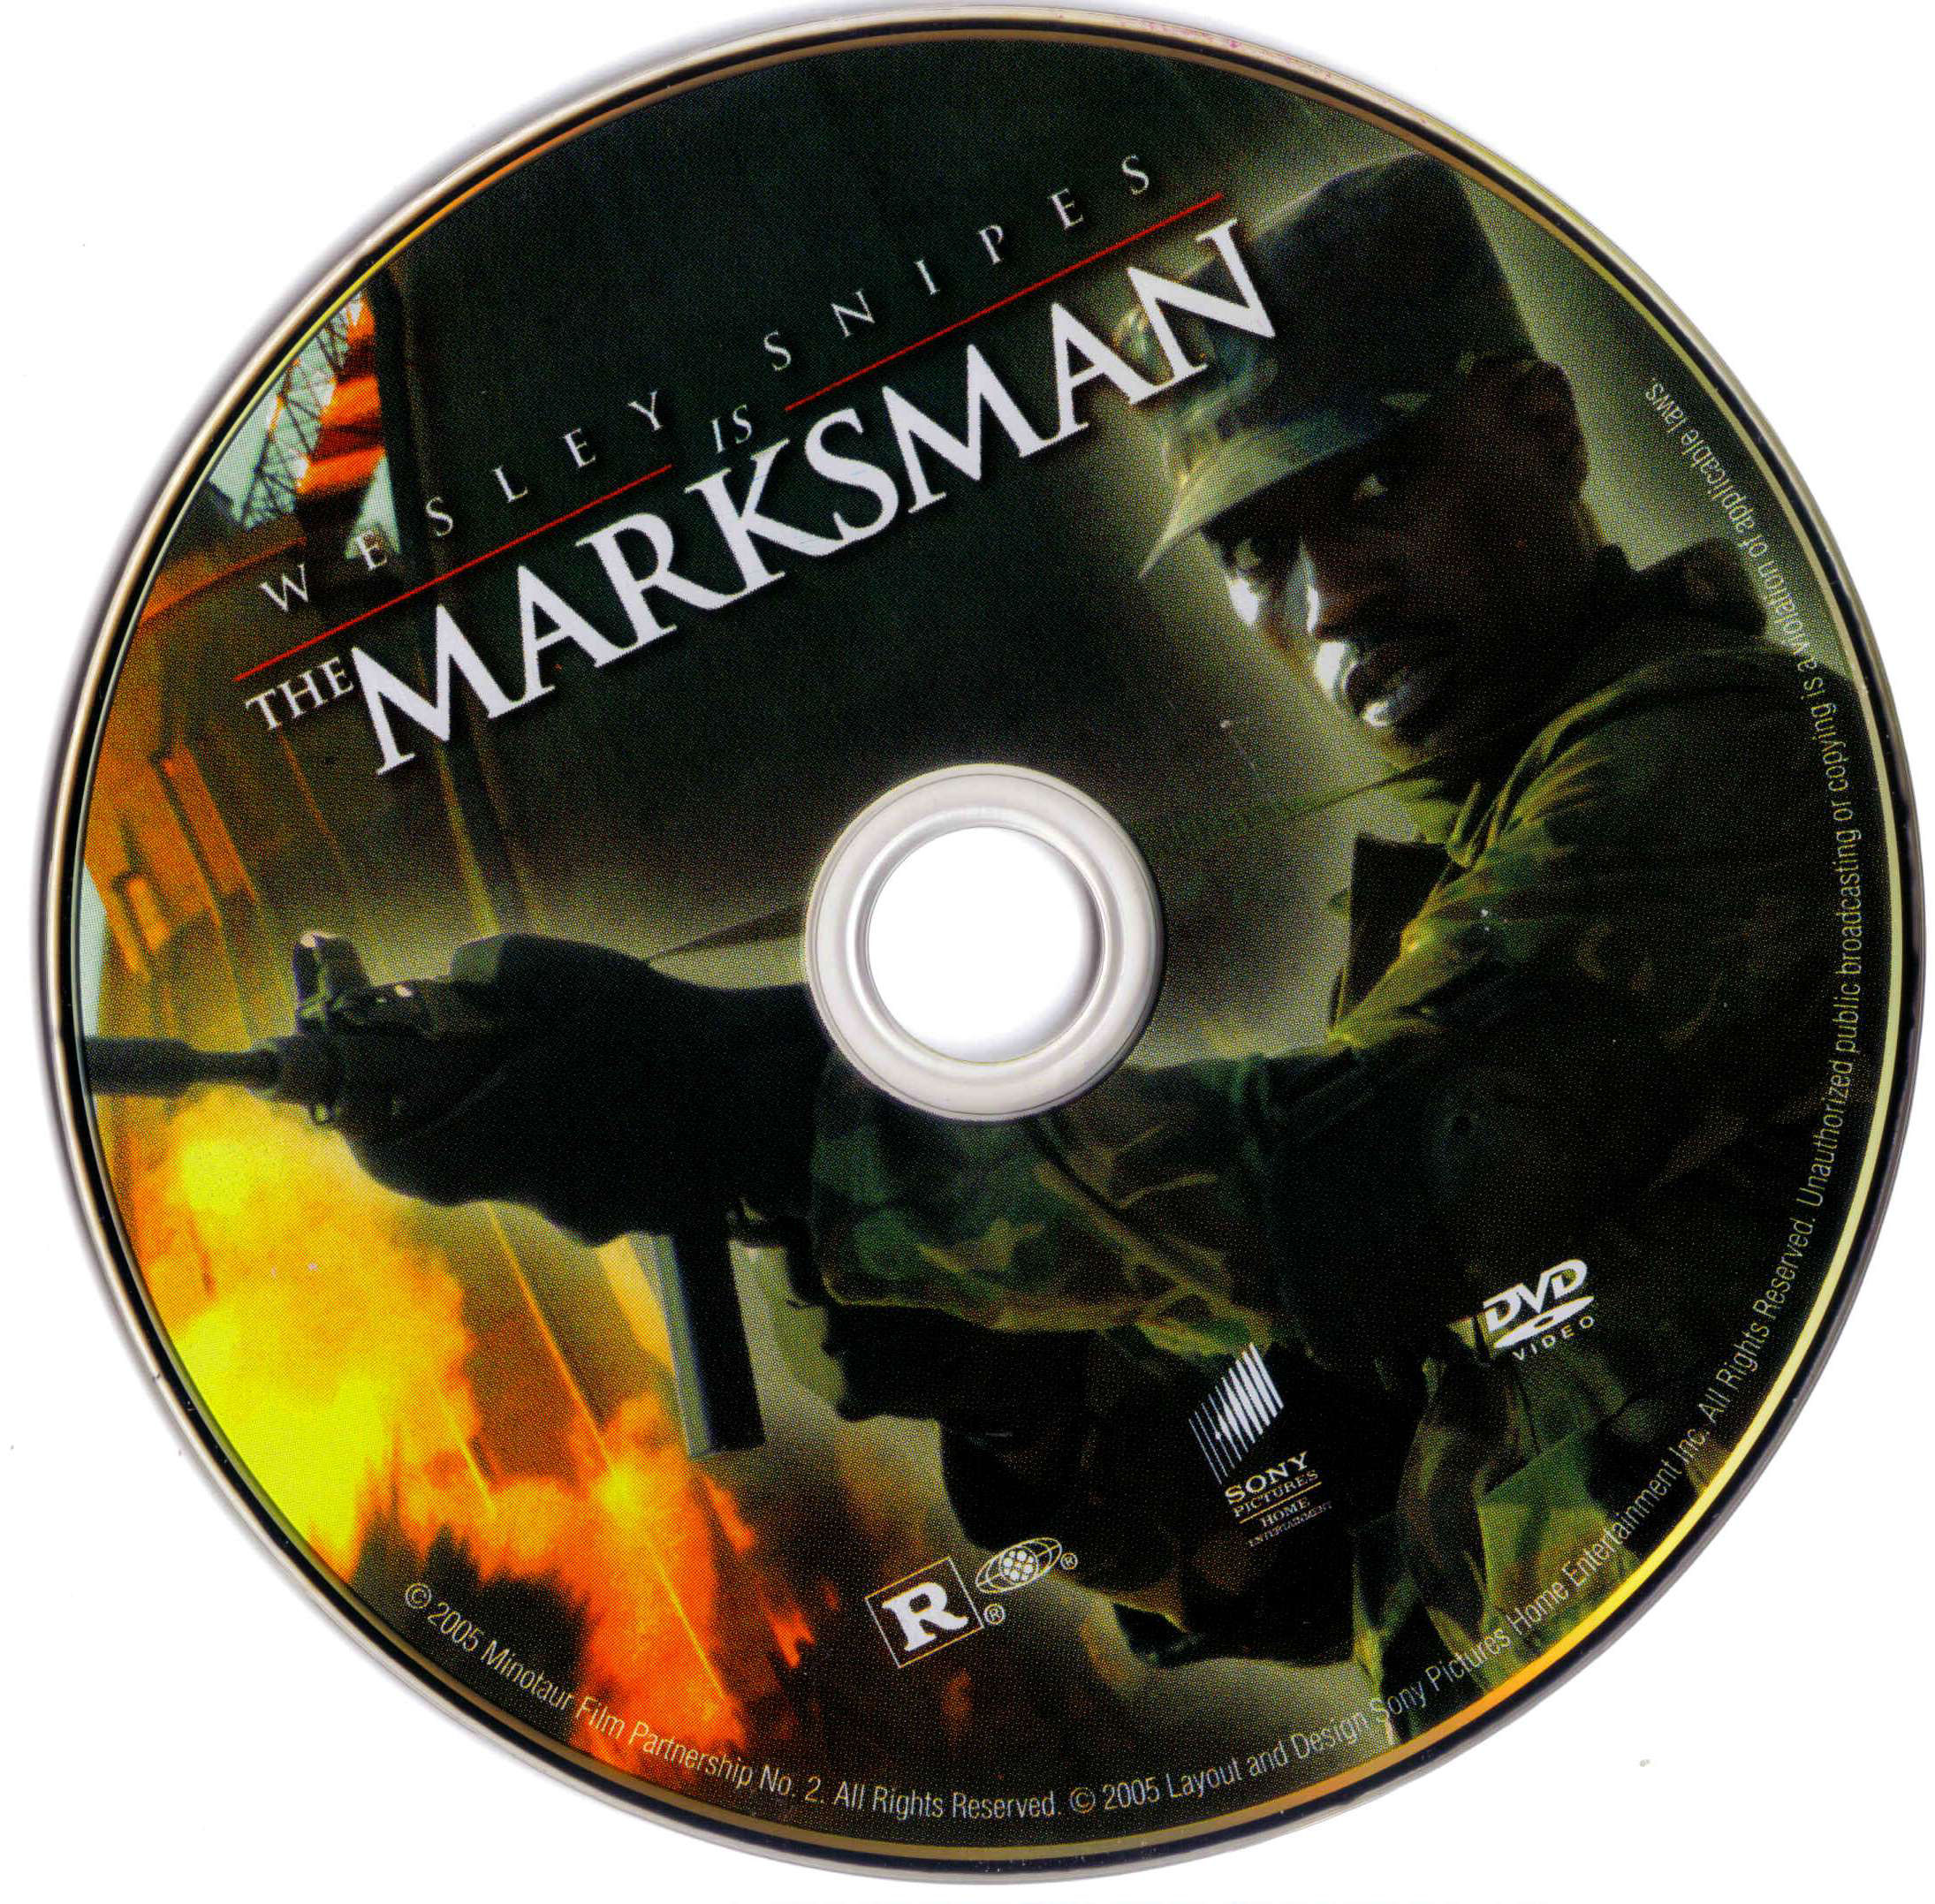 The marksman 2005